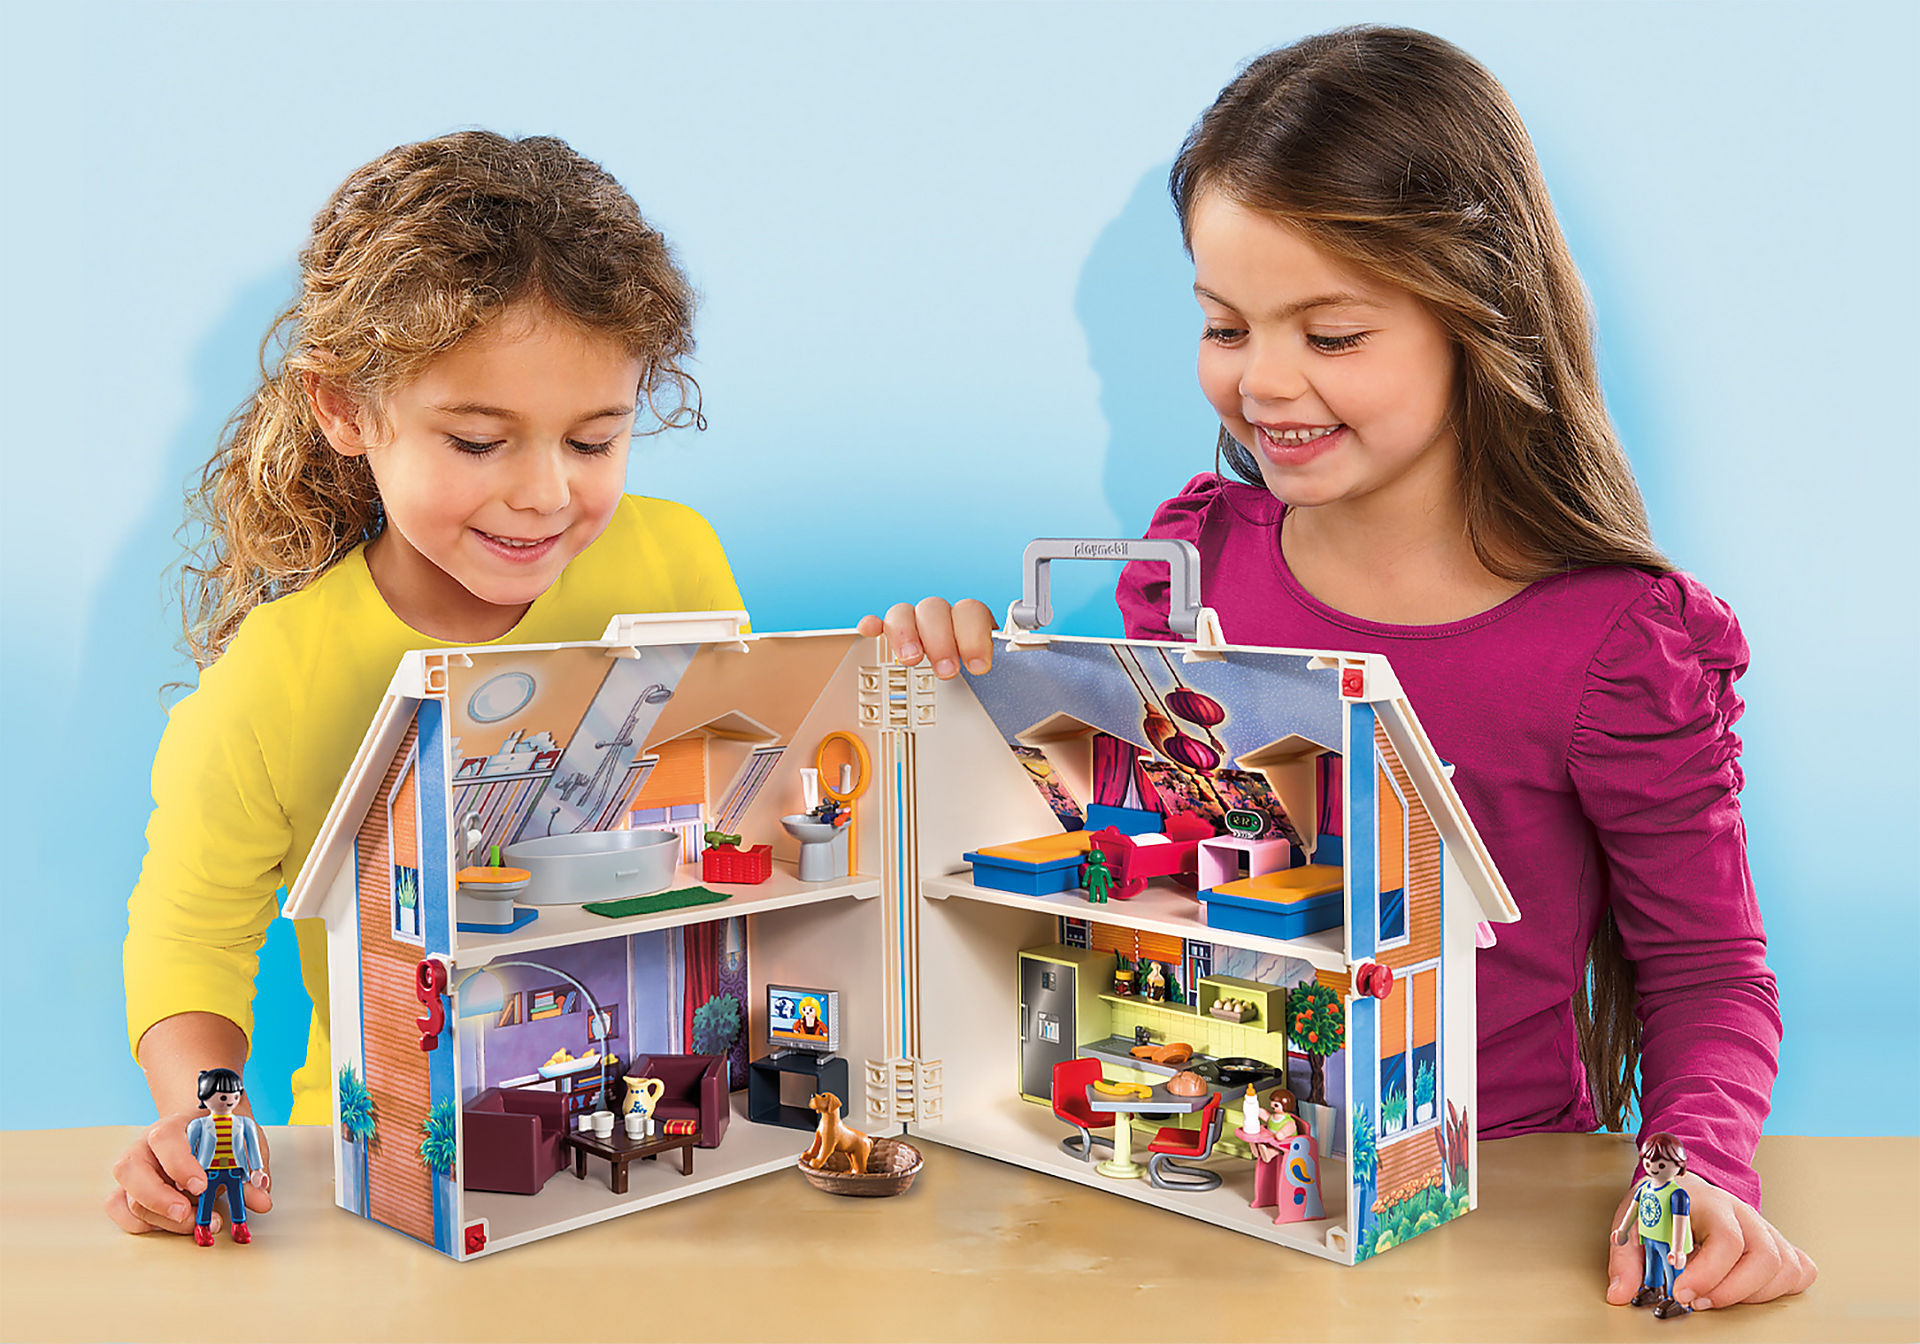 Playmobil kofferhaus - Die preiswertesten Playmobil kofferhaus unter die Lupe genommen